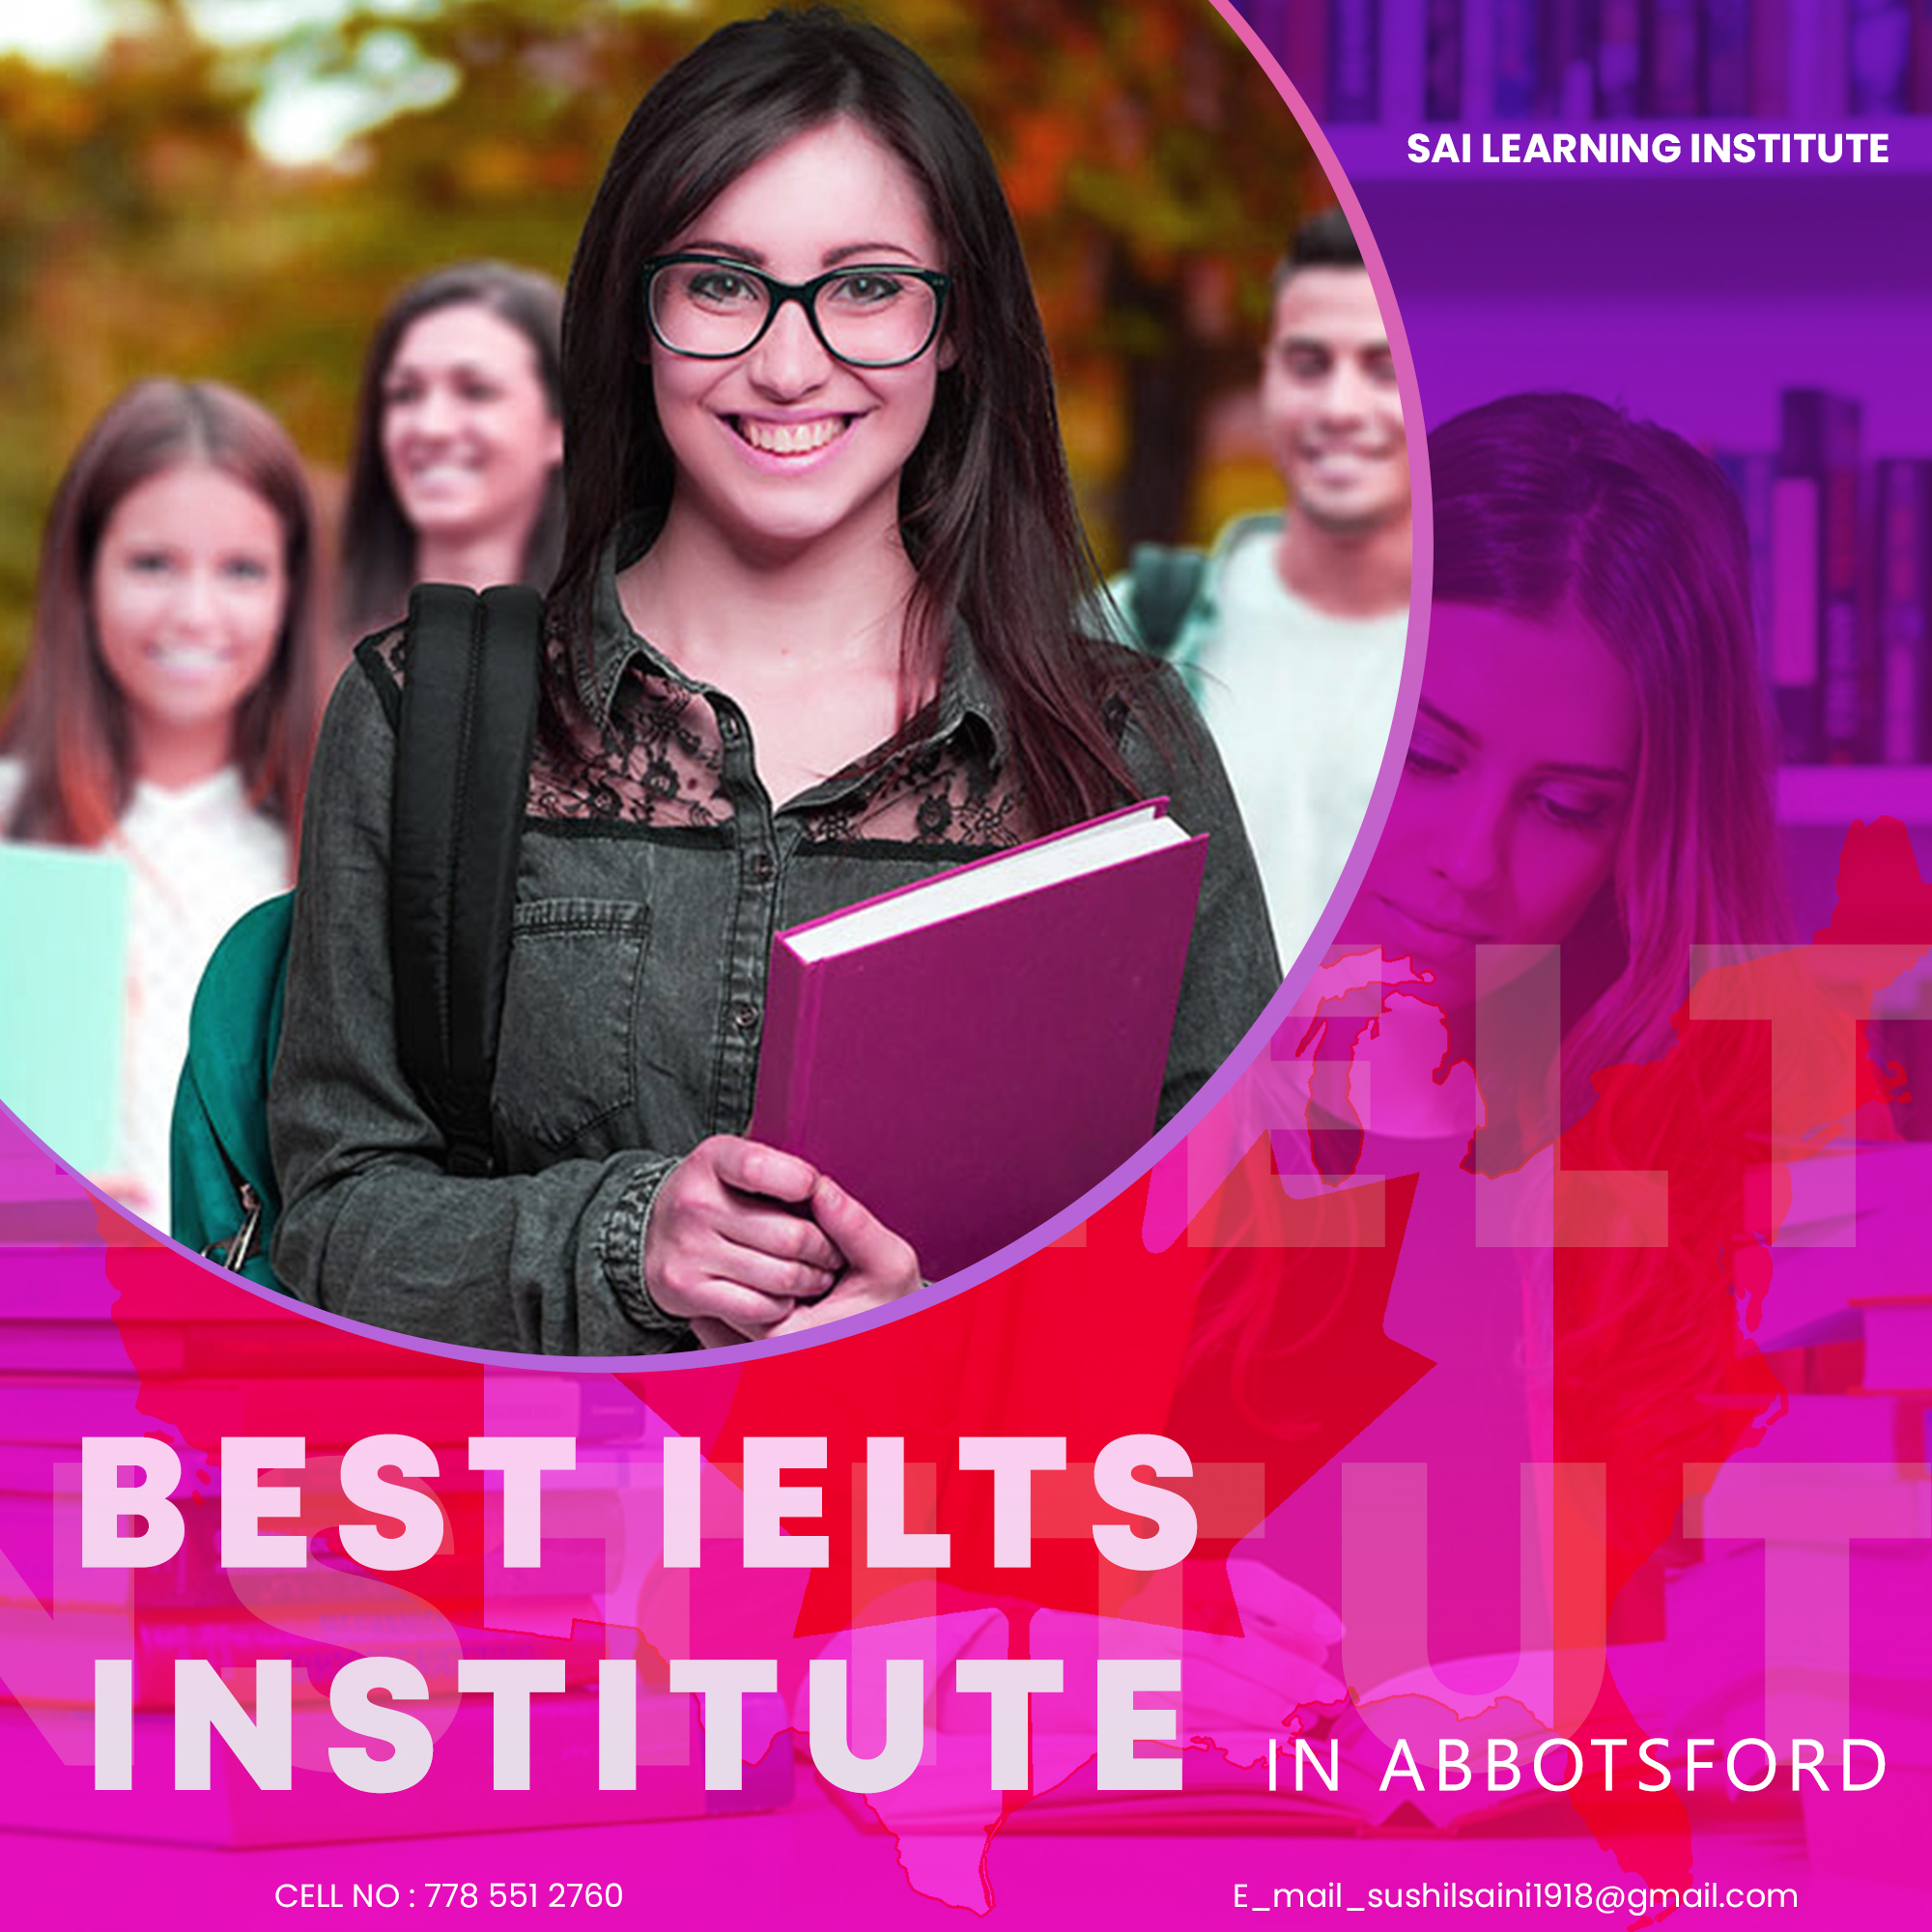 best ielts institute in abbotsford